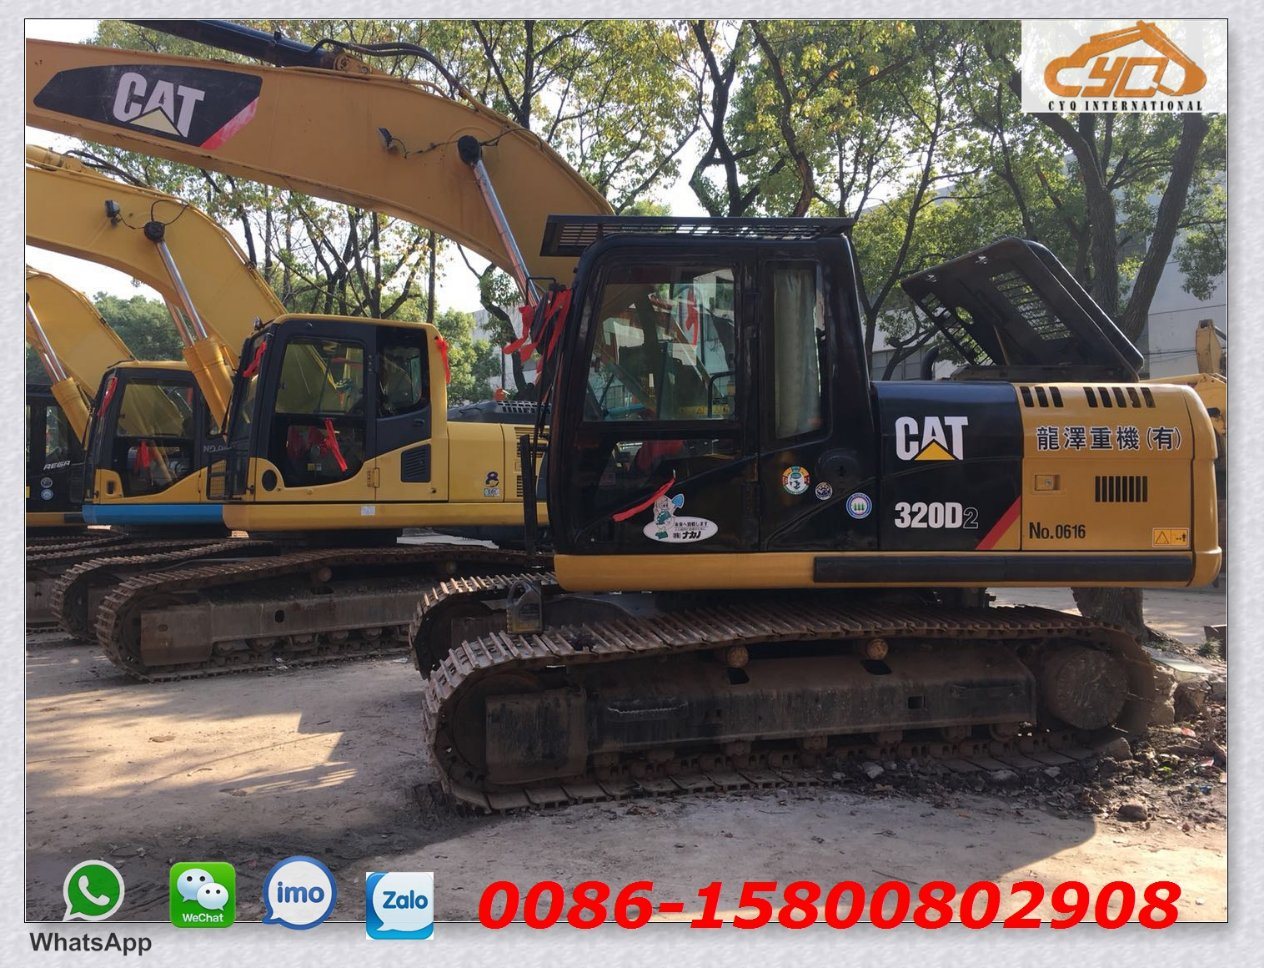 
                Escavatore Cat 320d2 usato in vendita
            